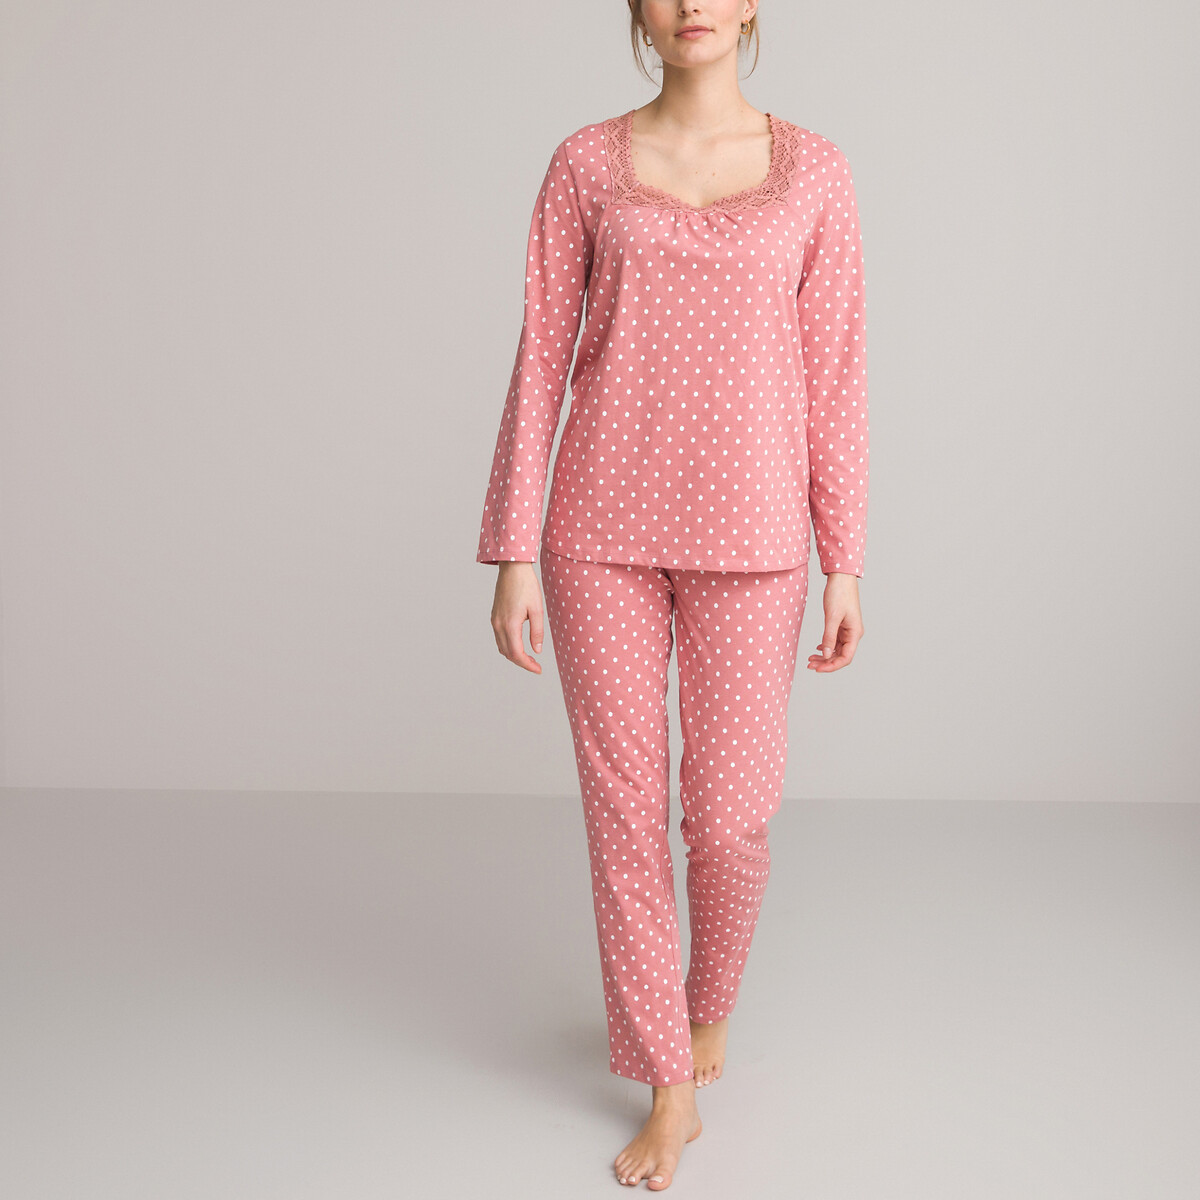 Polka dot cotton pyjamas with long sleeves polka dot print Anne Weyburn ...